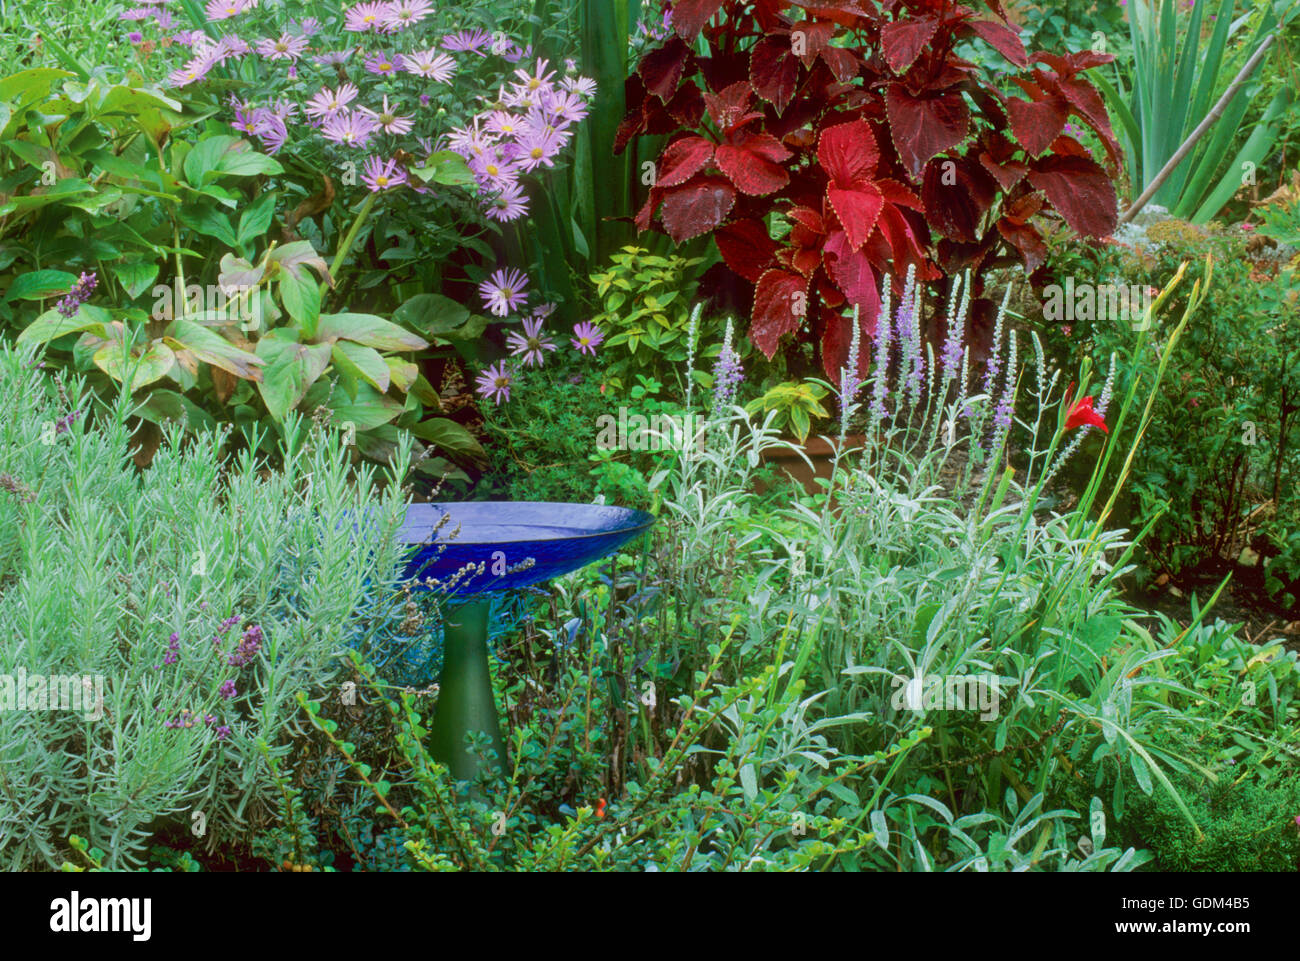 Blue glass birdbath in garden setting Stock Photo